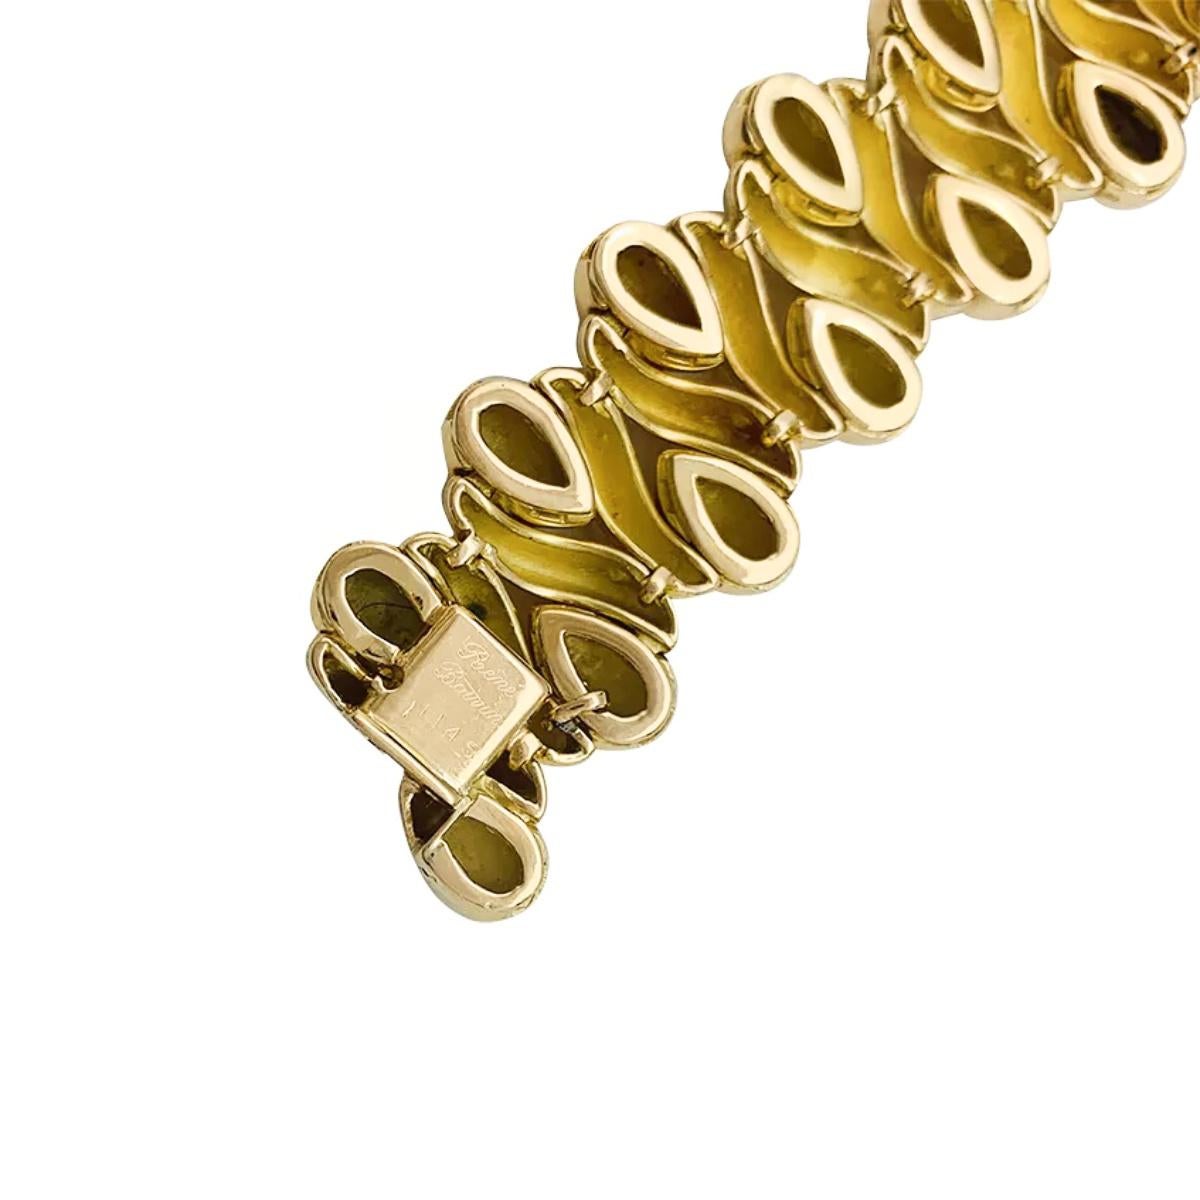 René Boivin gold bracelet. 1